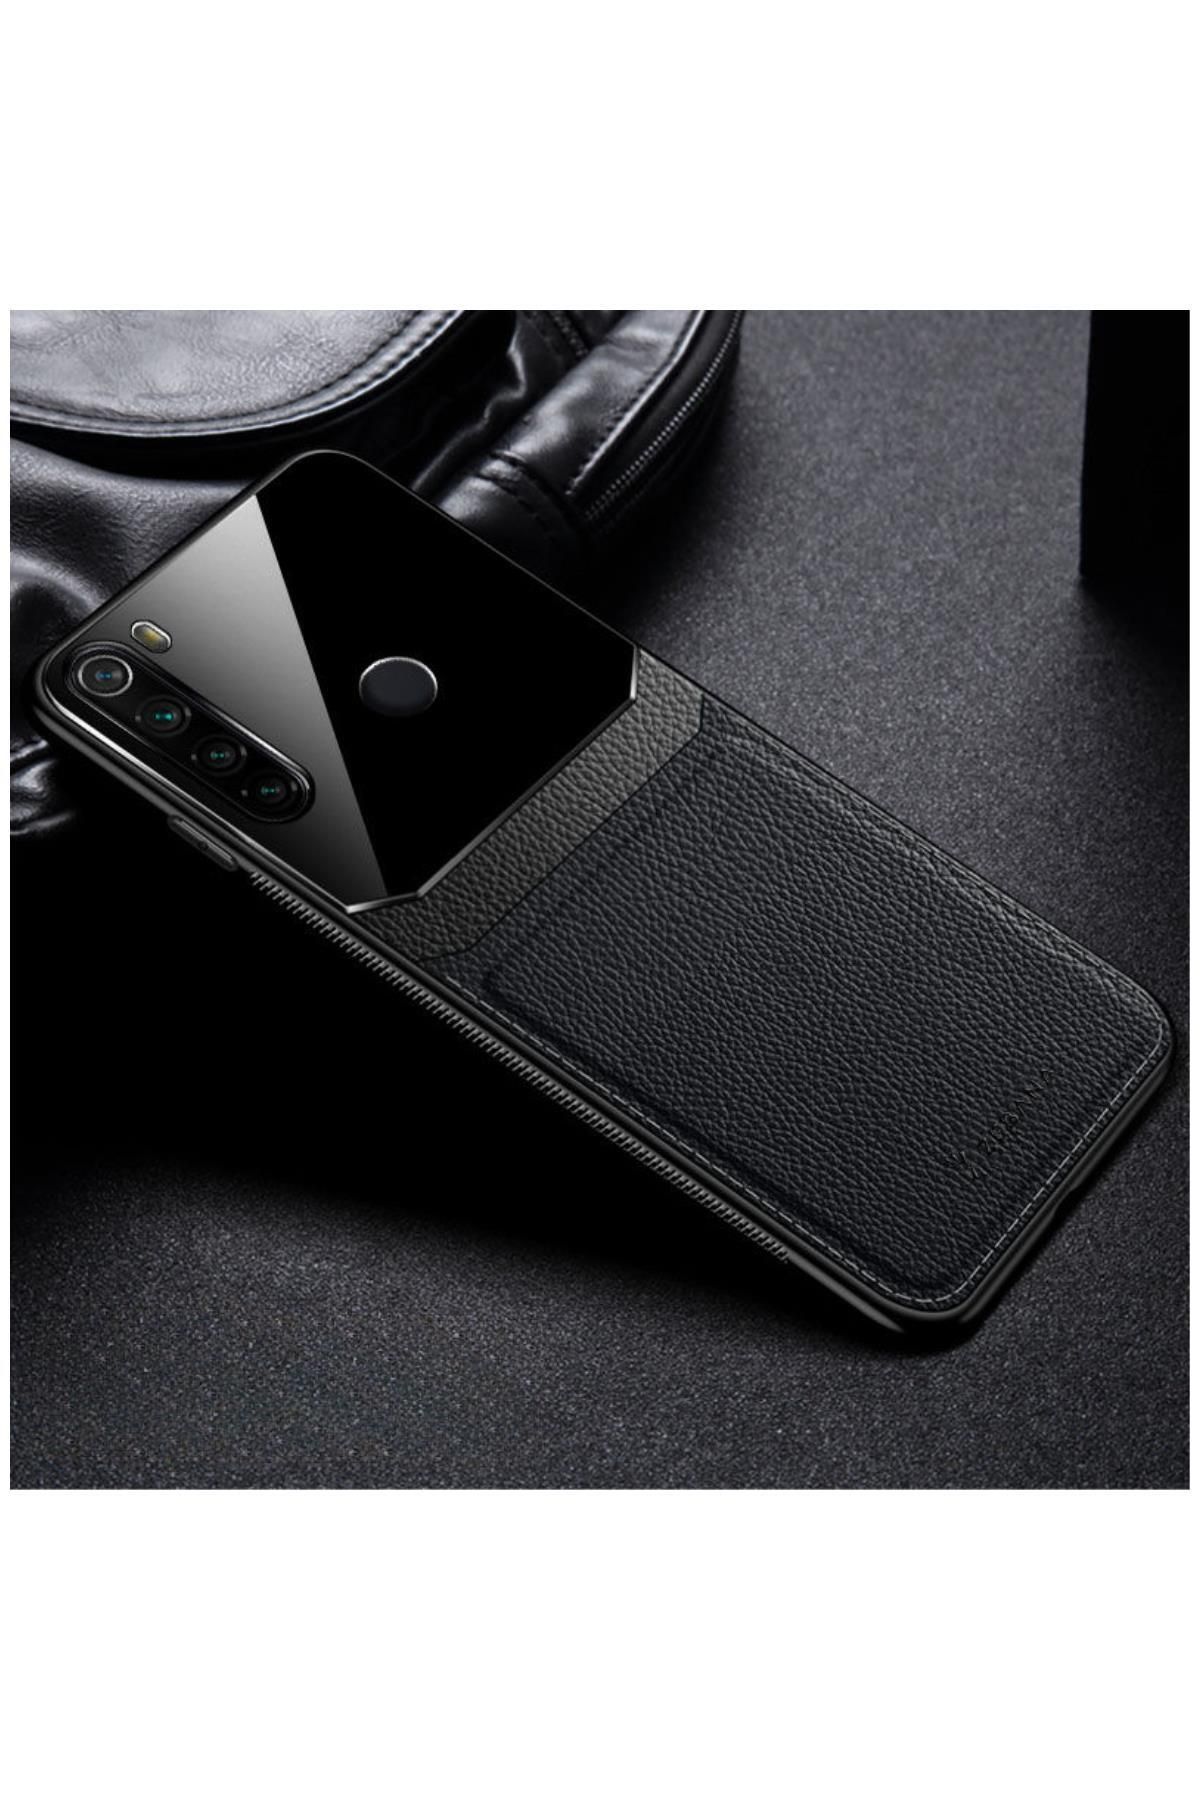 Dara Aksesuar Xiaomi Redmi Note 8 Uyumlu Kılıf Zebana Lens Deri Kılıf Siyah